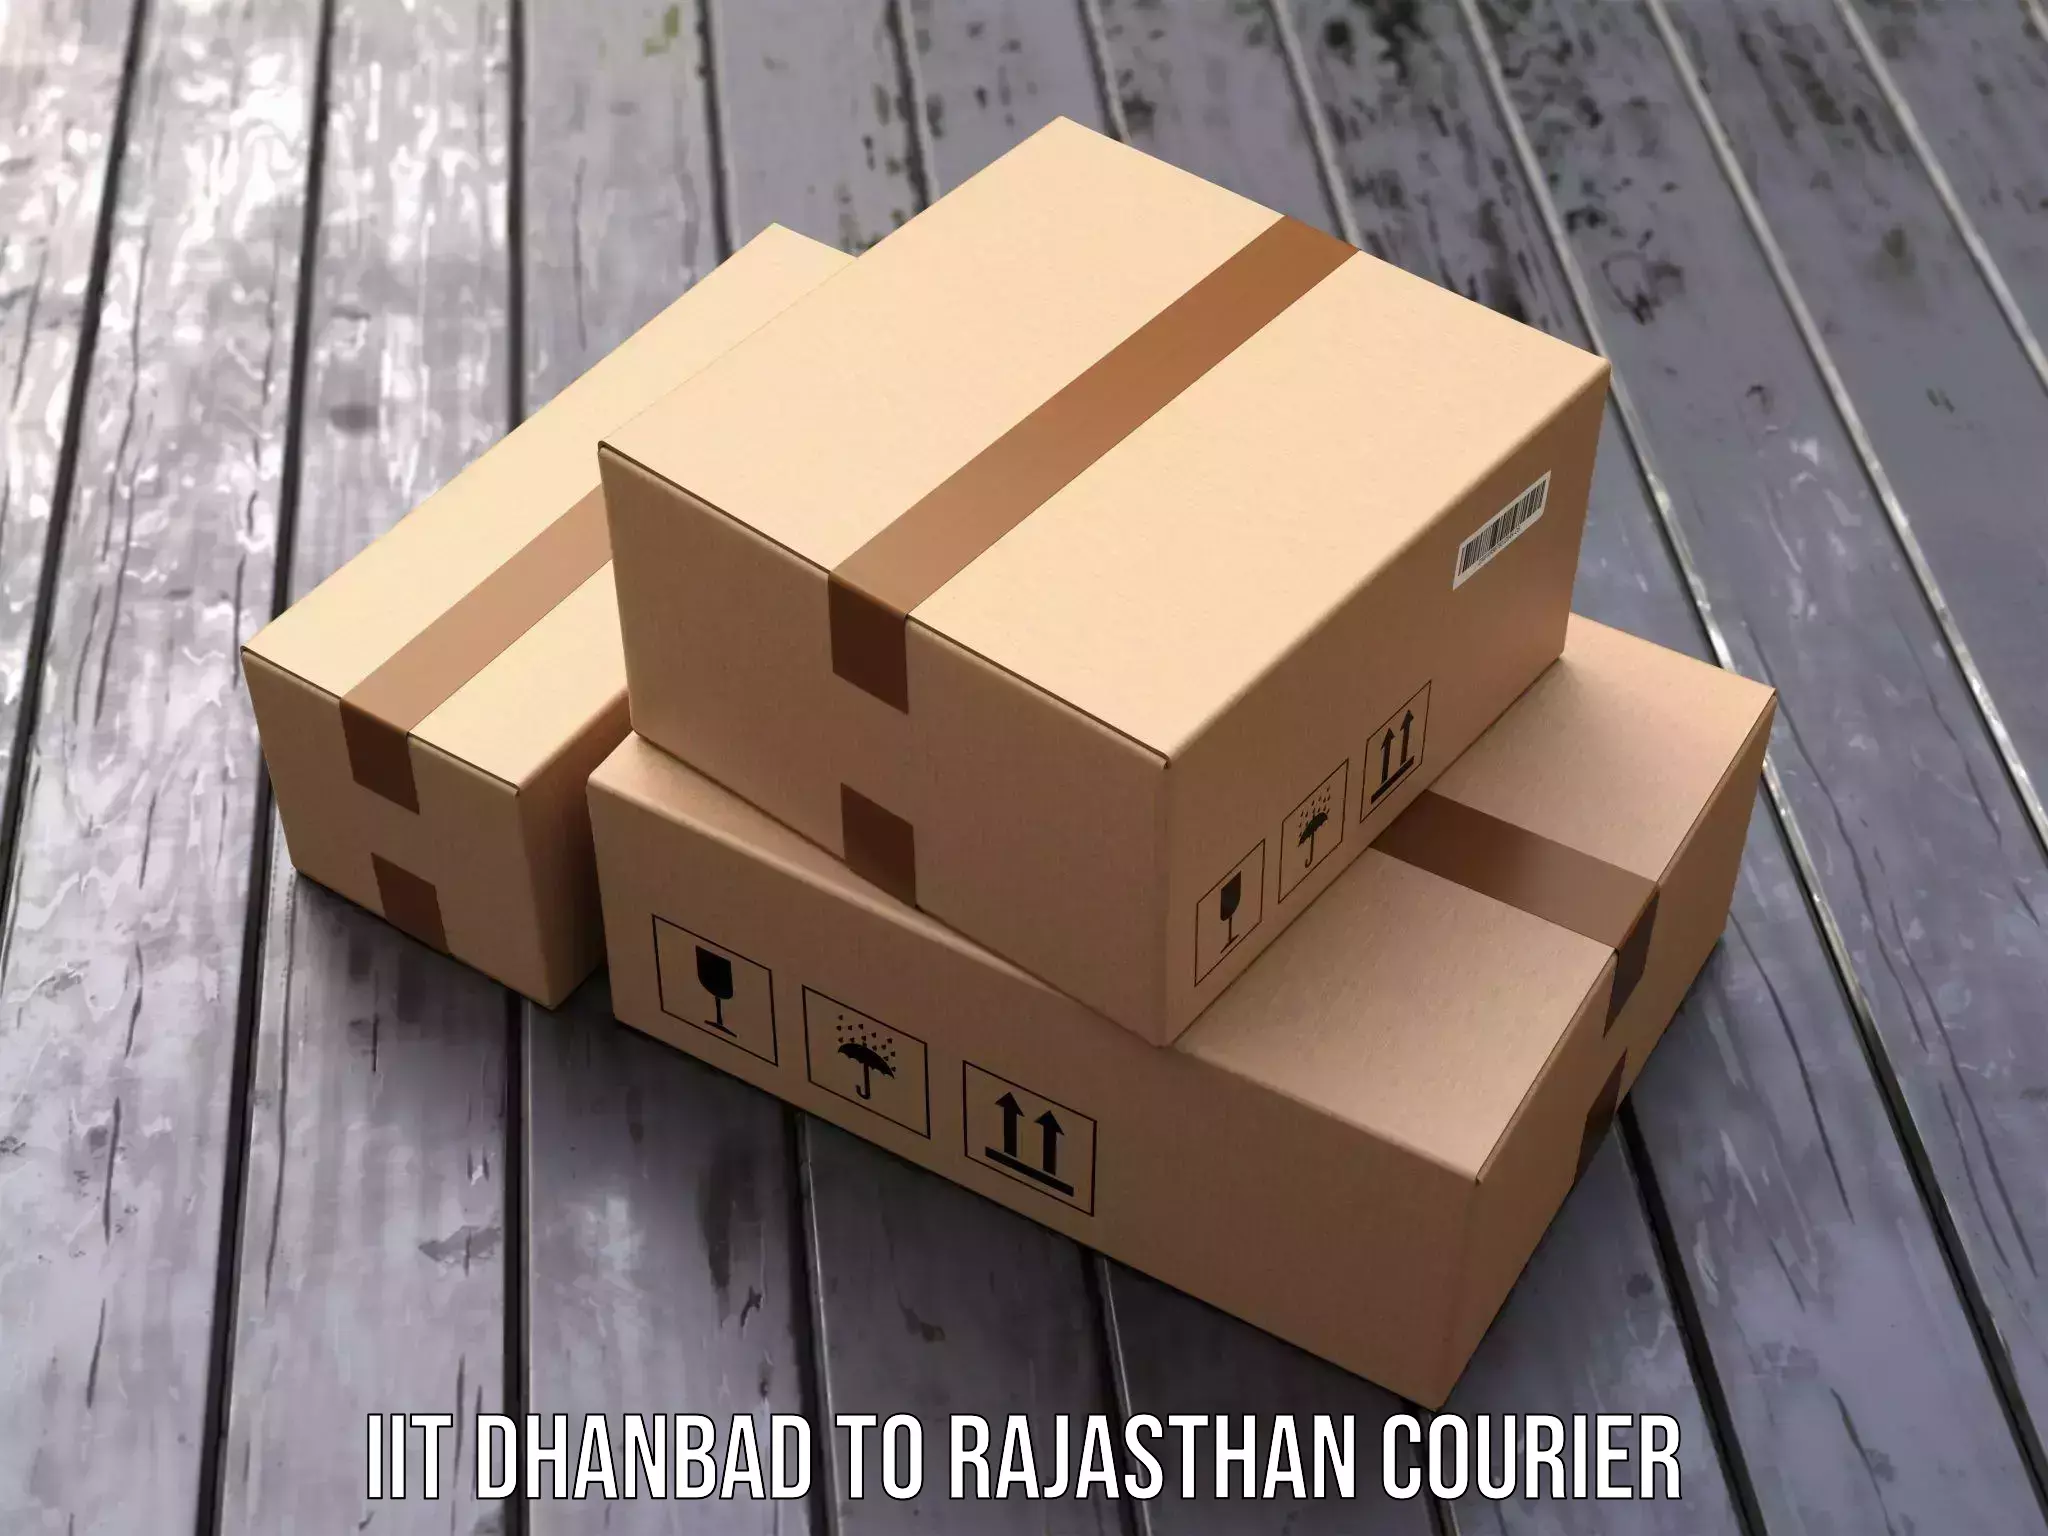 Courier service comparison IIT Dhanbad to Bajore